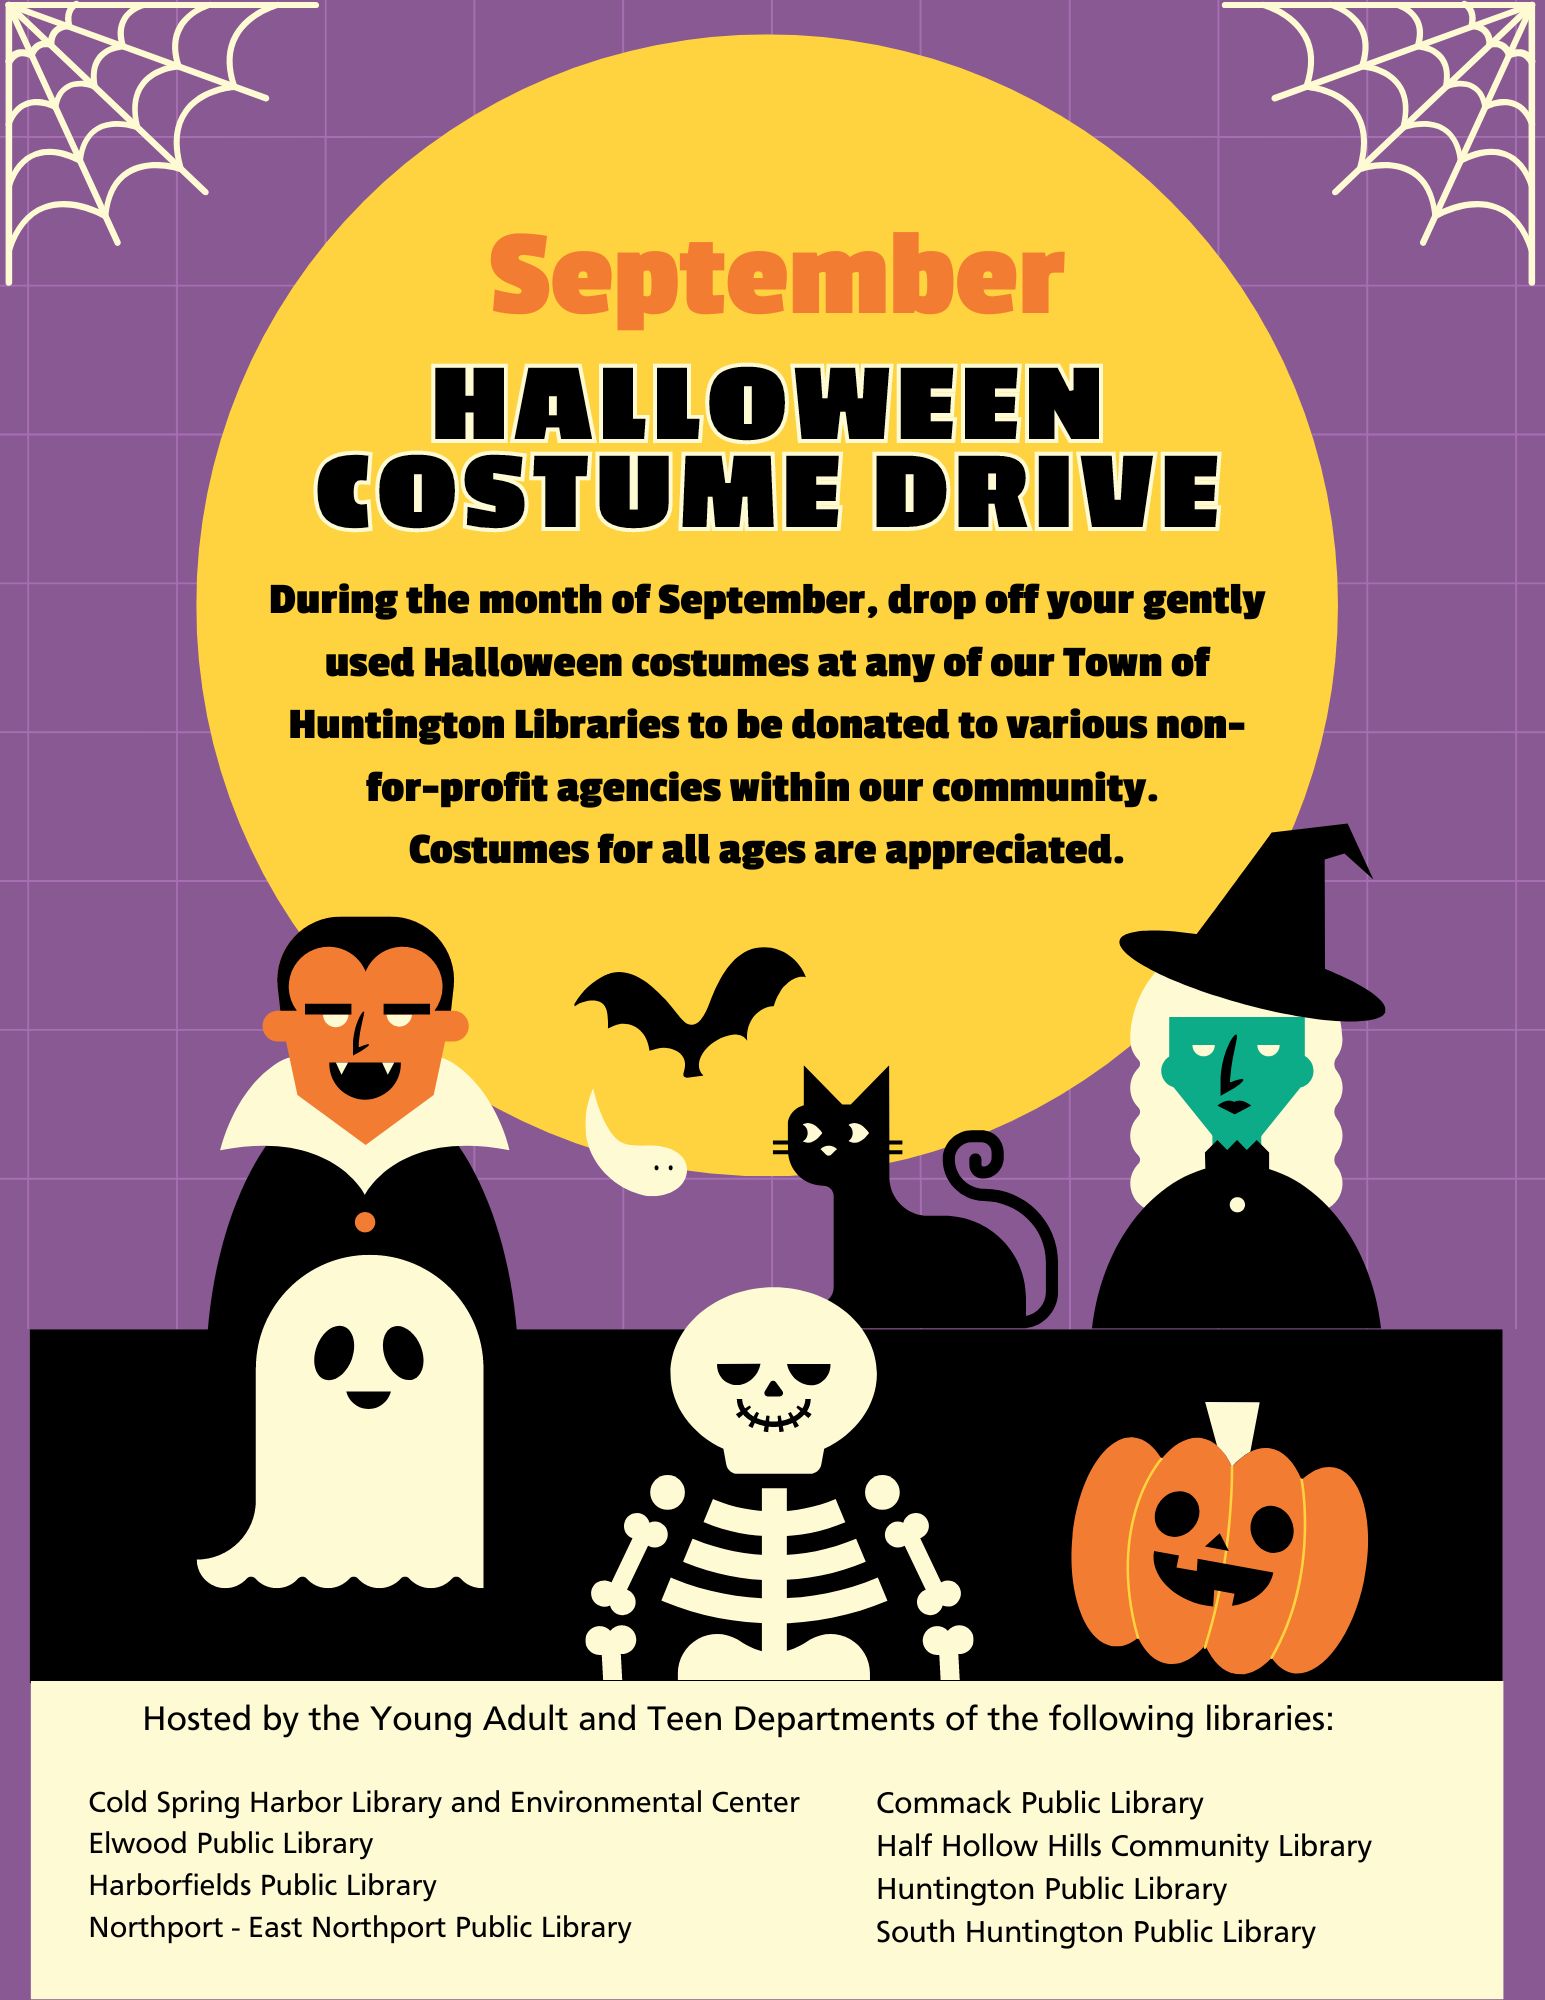 Halloween Costume Drive